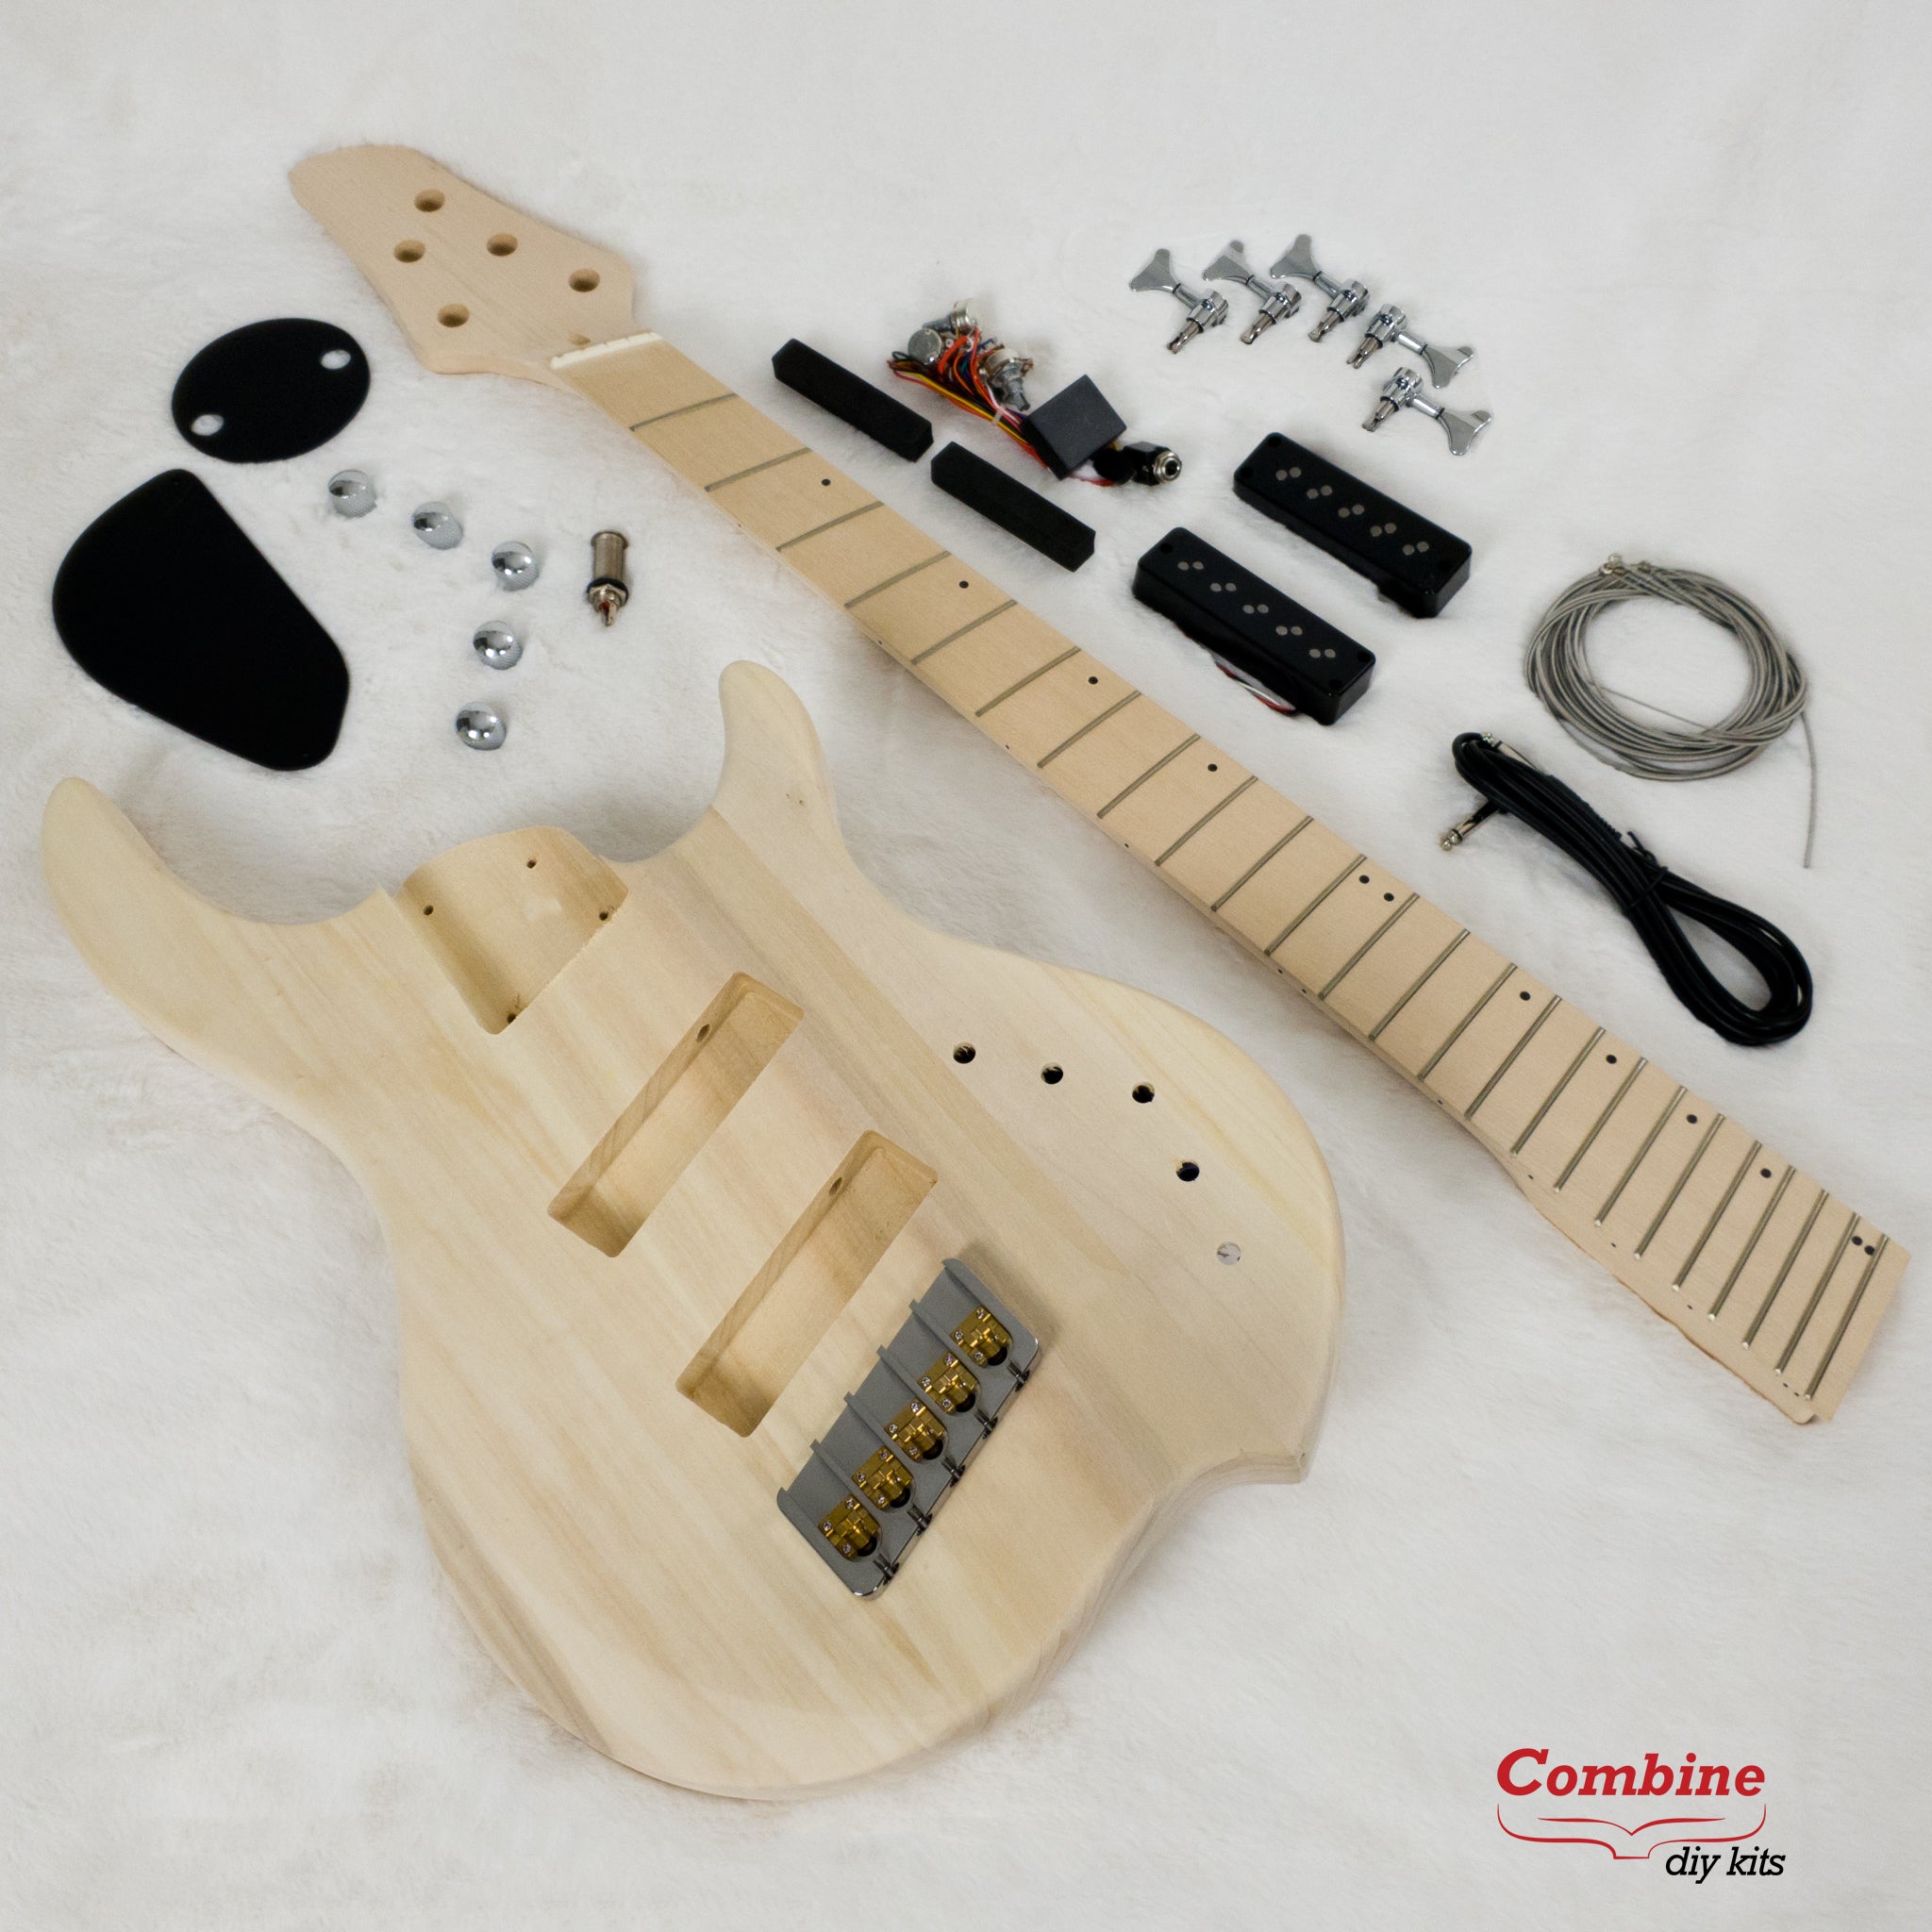 Combine Multiscale 5-String DIY Guitar Kit